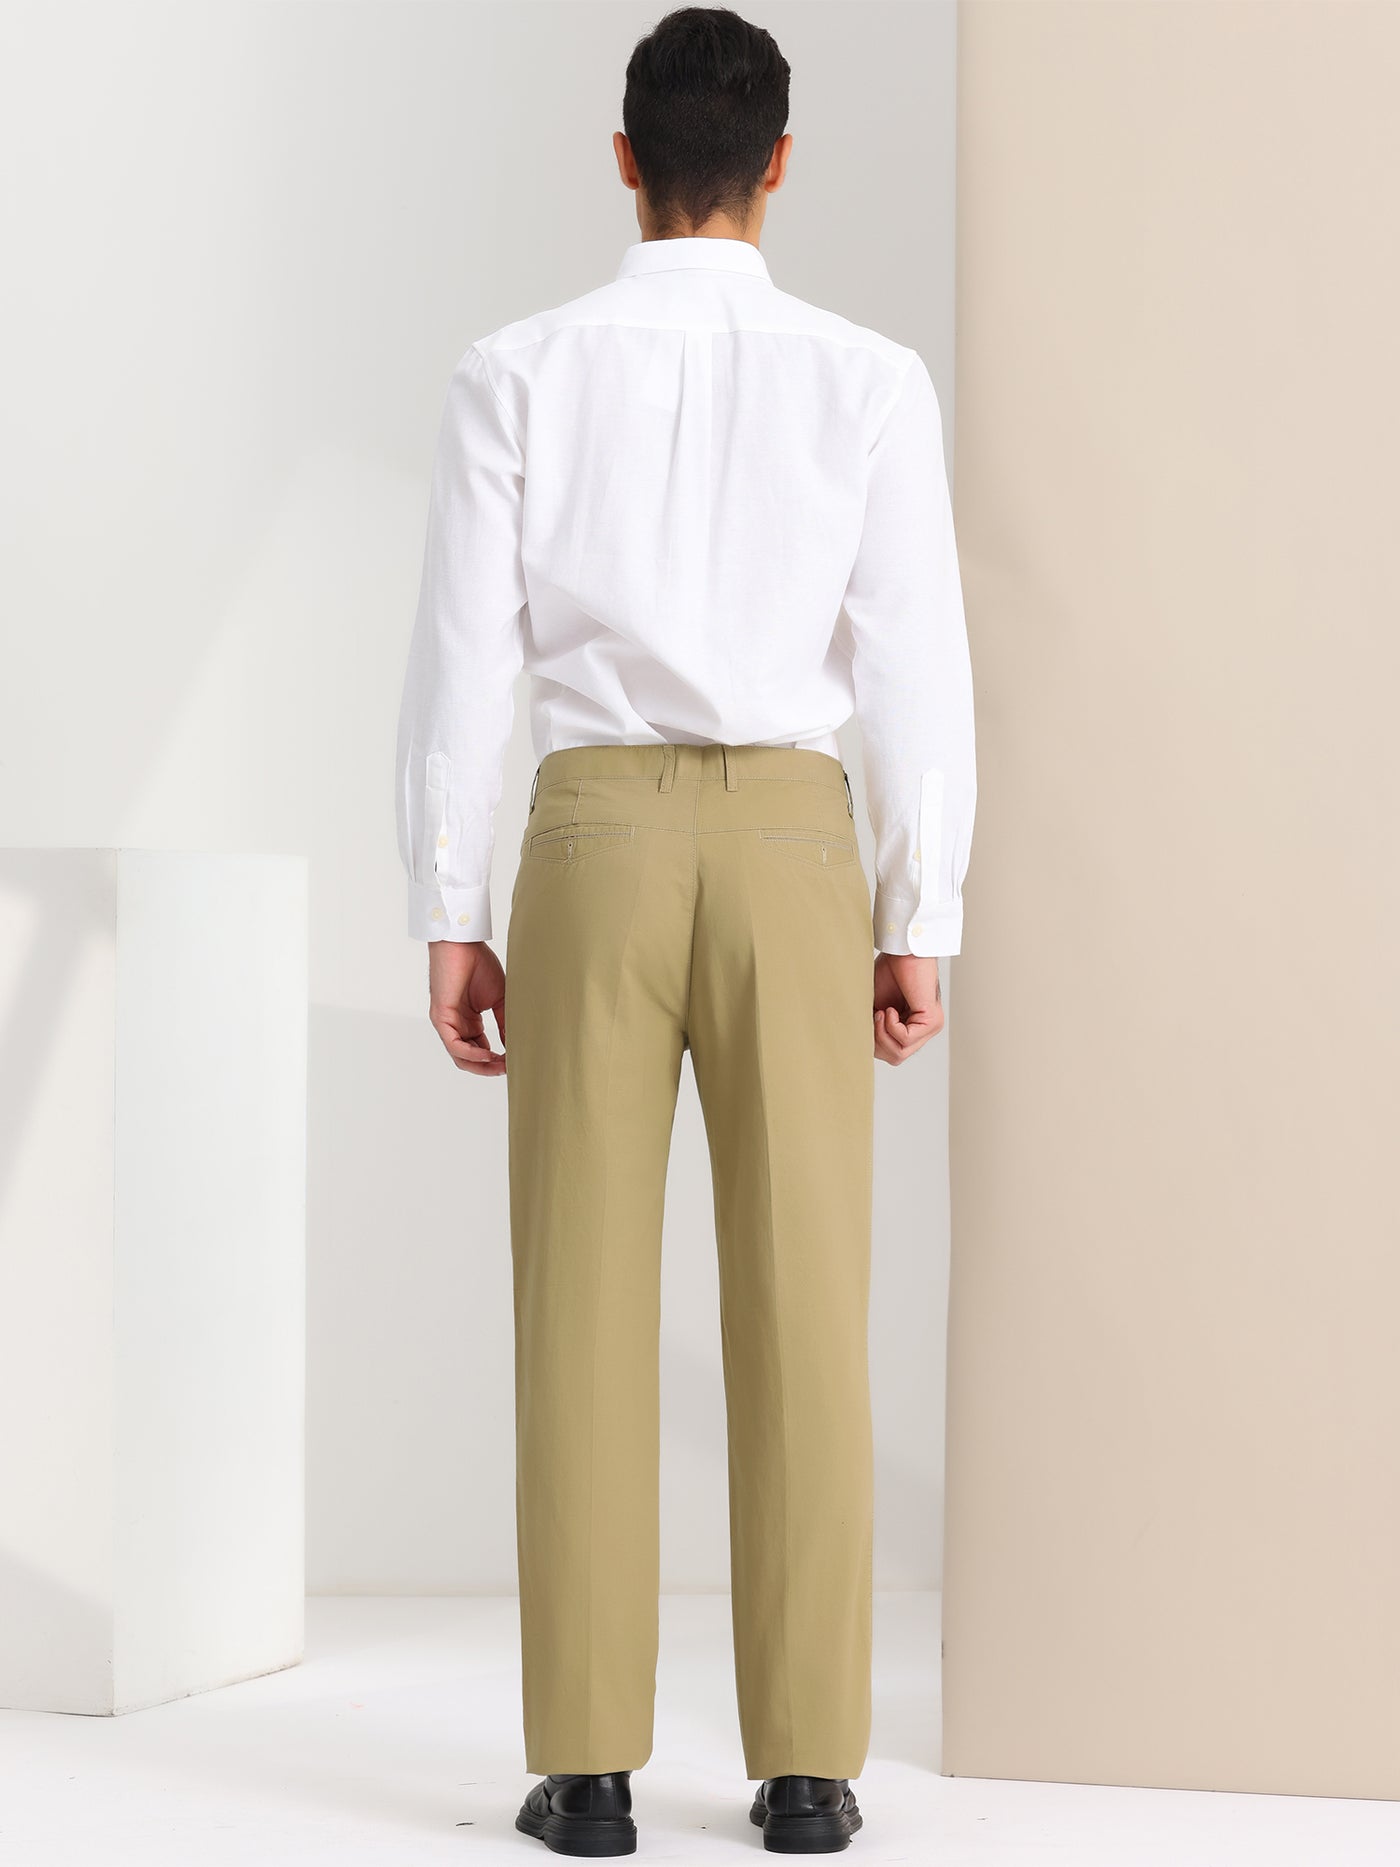 Bublédon Men's Straight Fit Trousers Stretch Flat Front Business Office Dress Pants